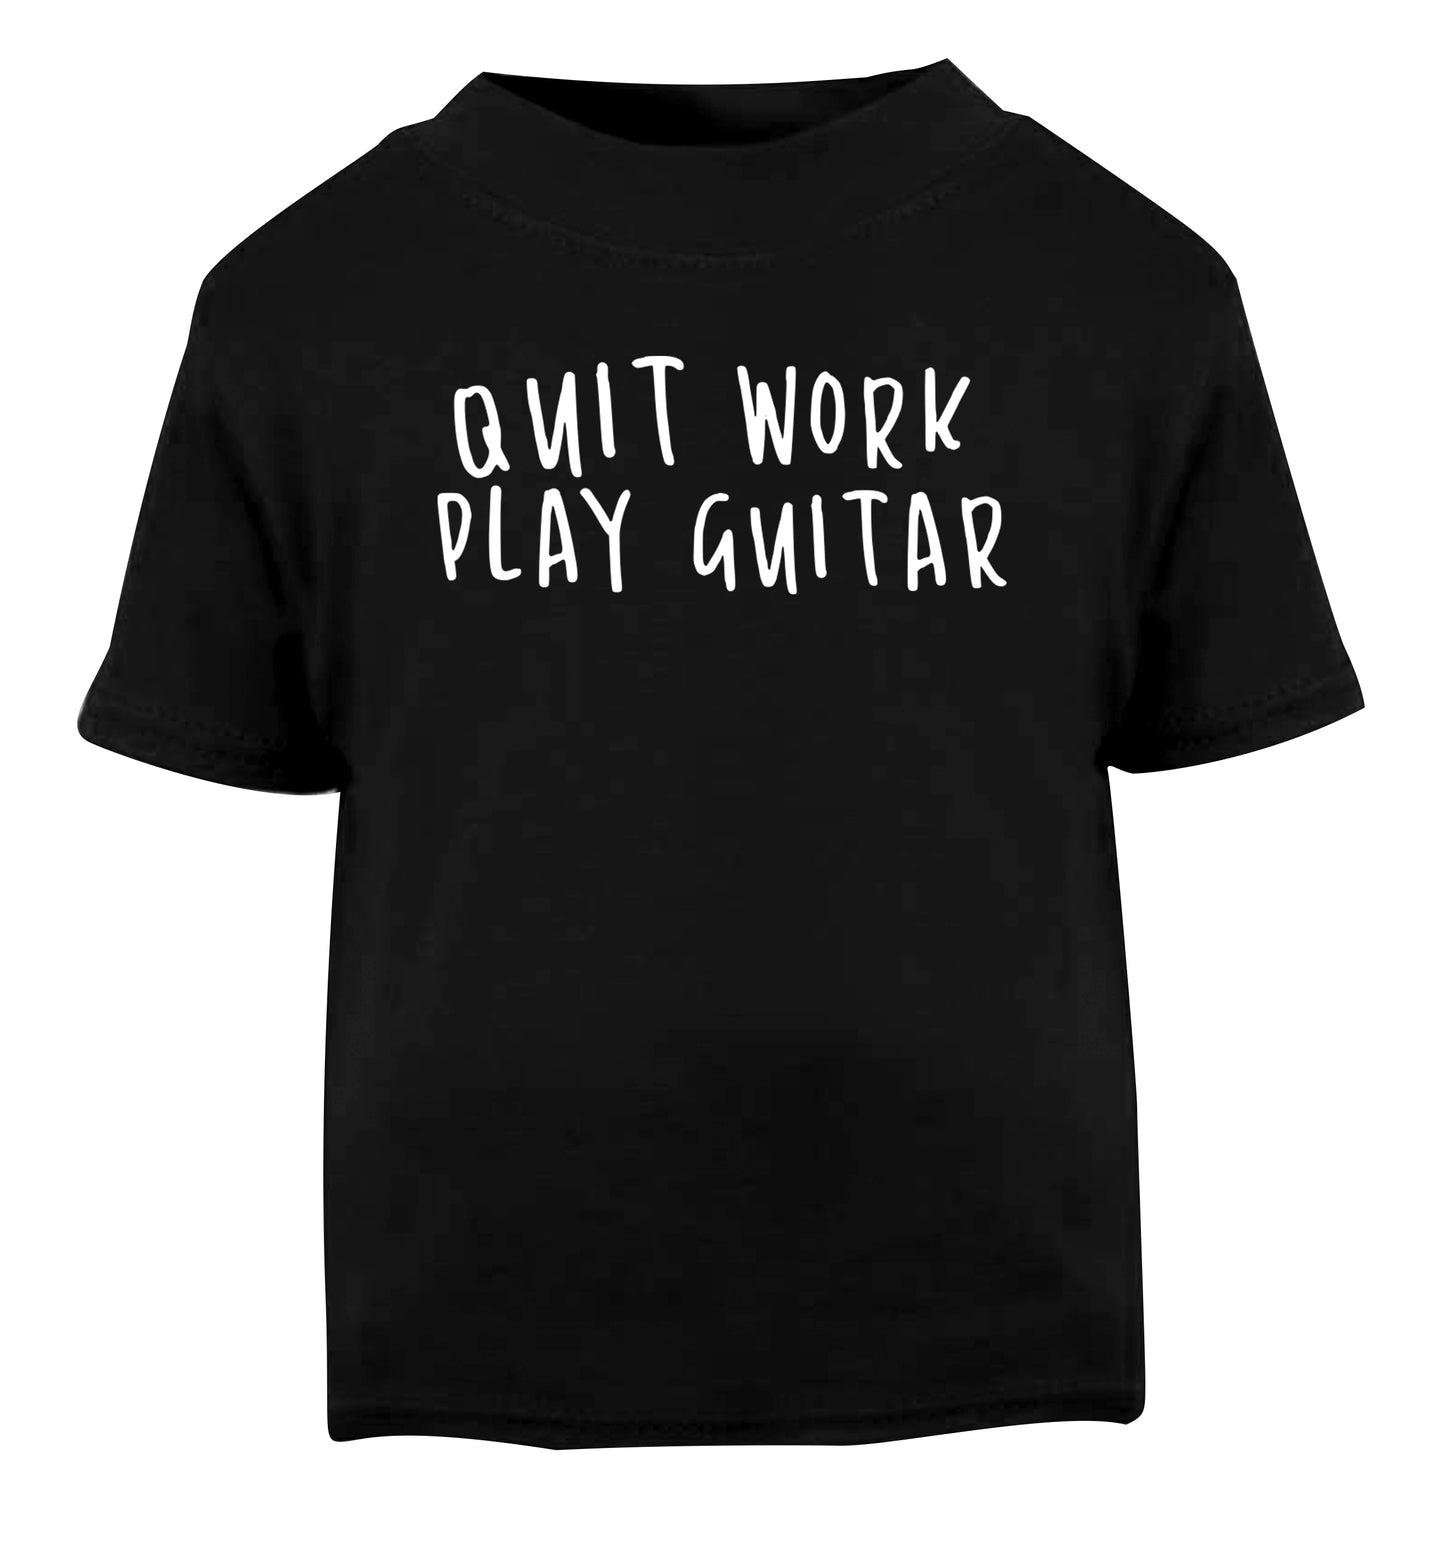 Quit work play guitar Black Baby Toddler Tshirt 2 years